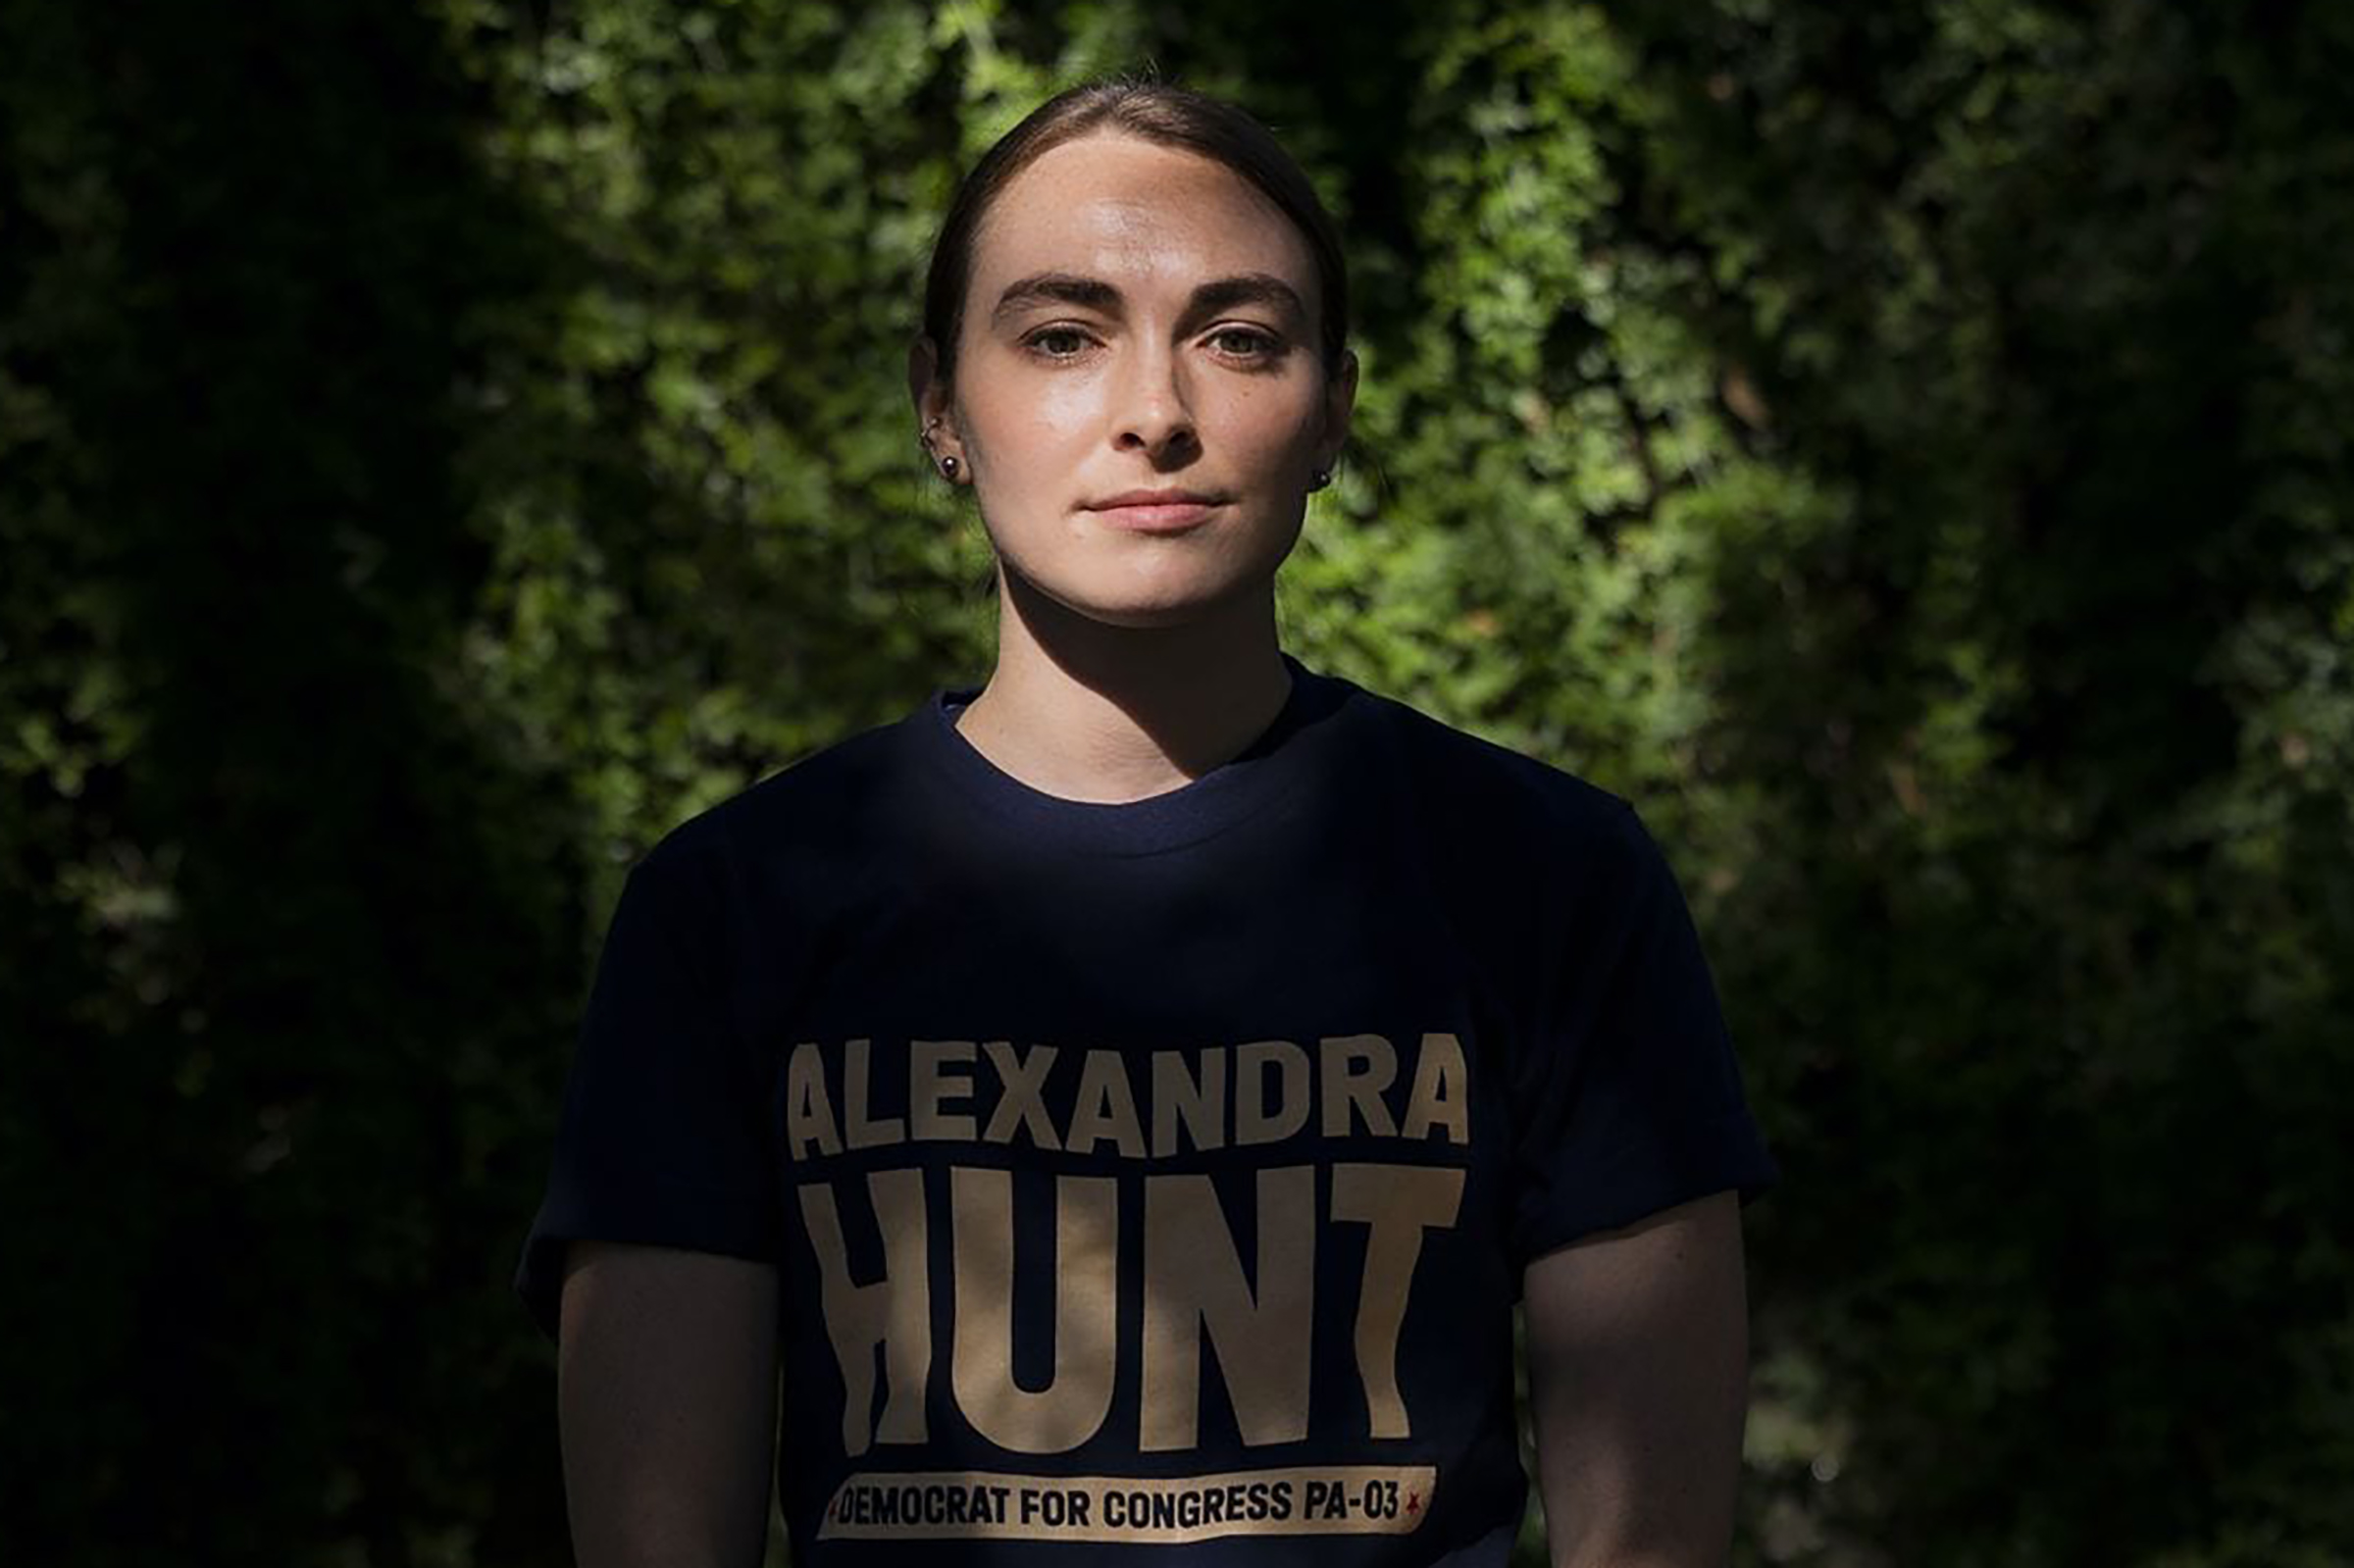 Alexandra hunt for congress